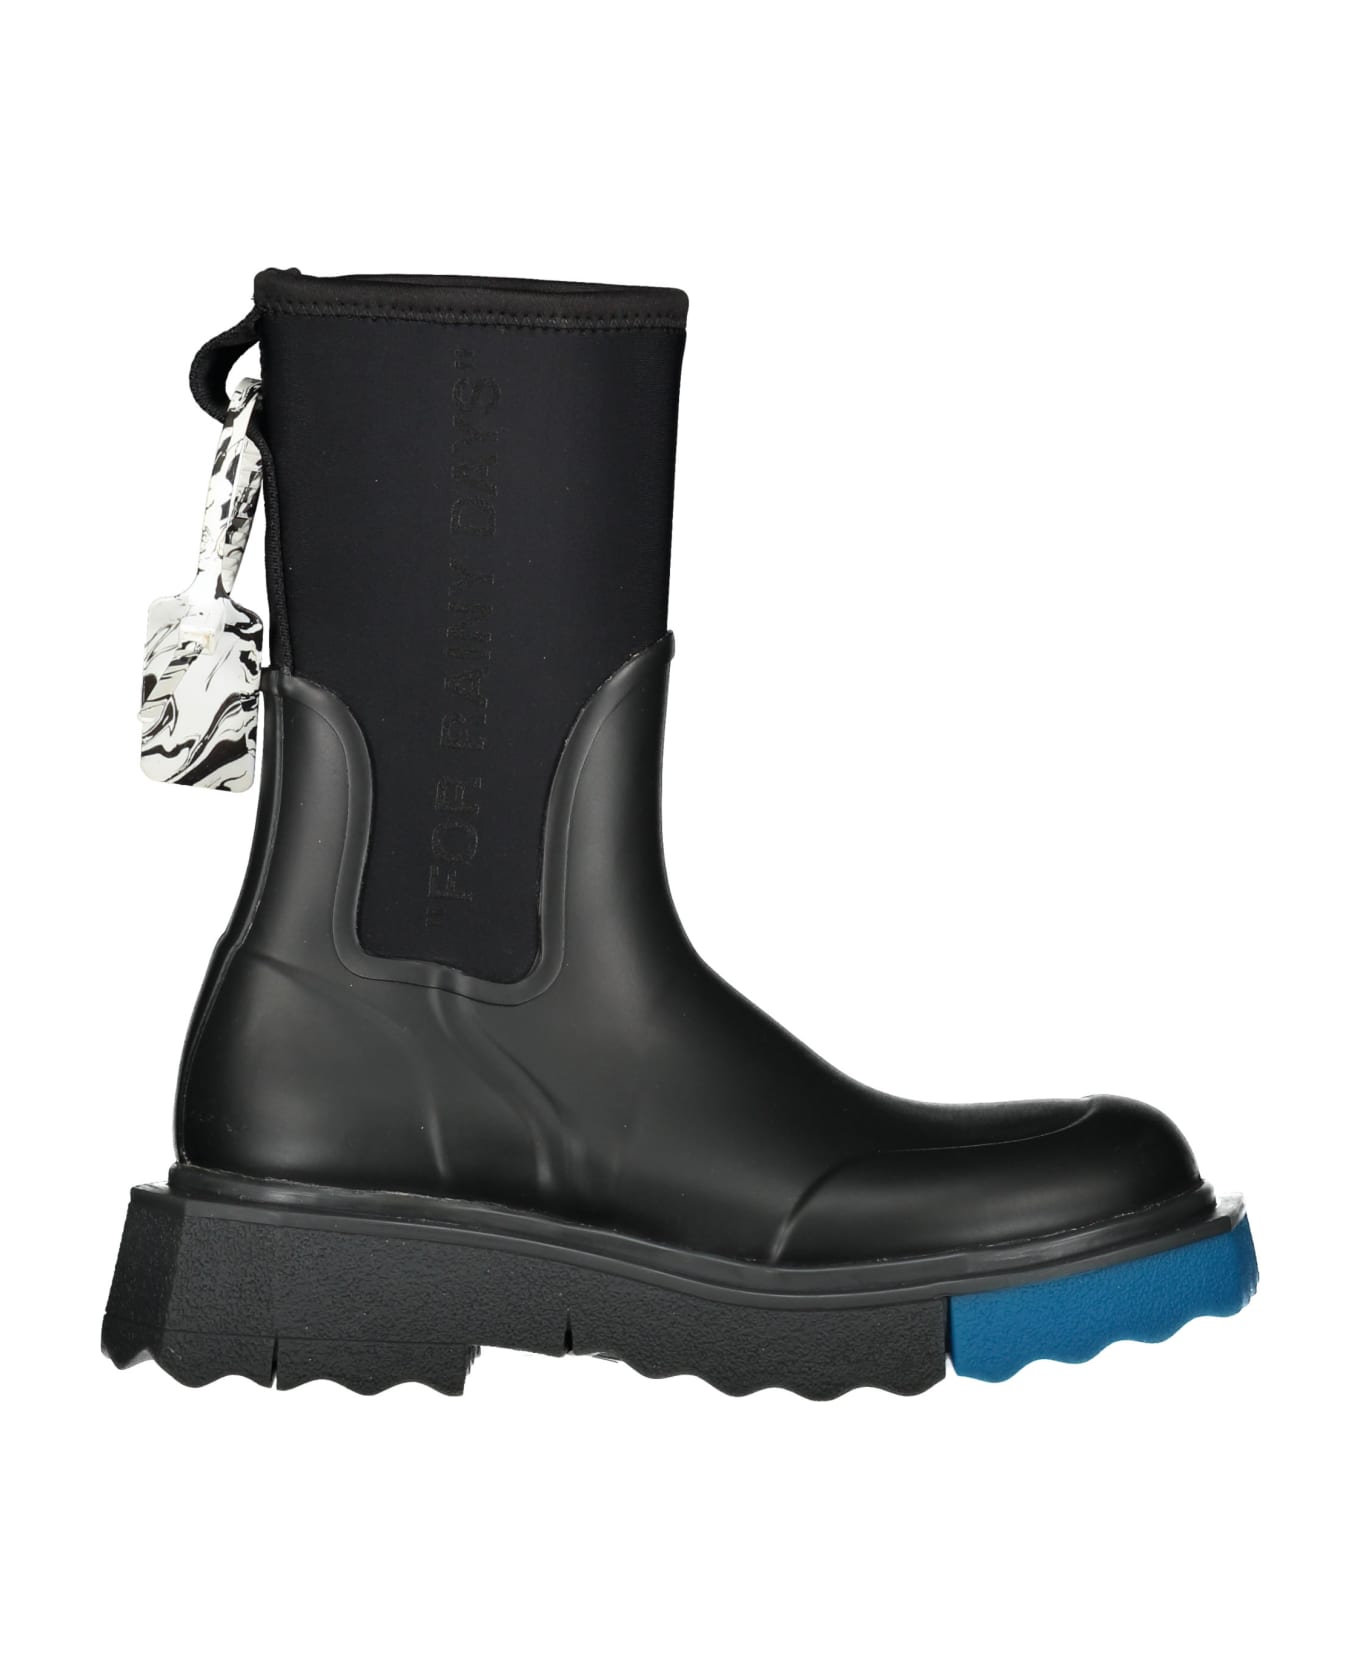 Off-White Rubber And Neoprene Rain Boots - black